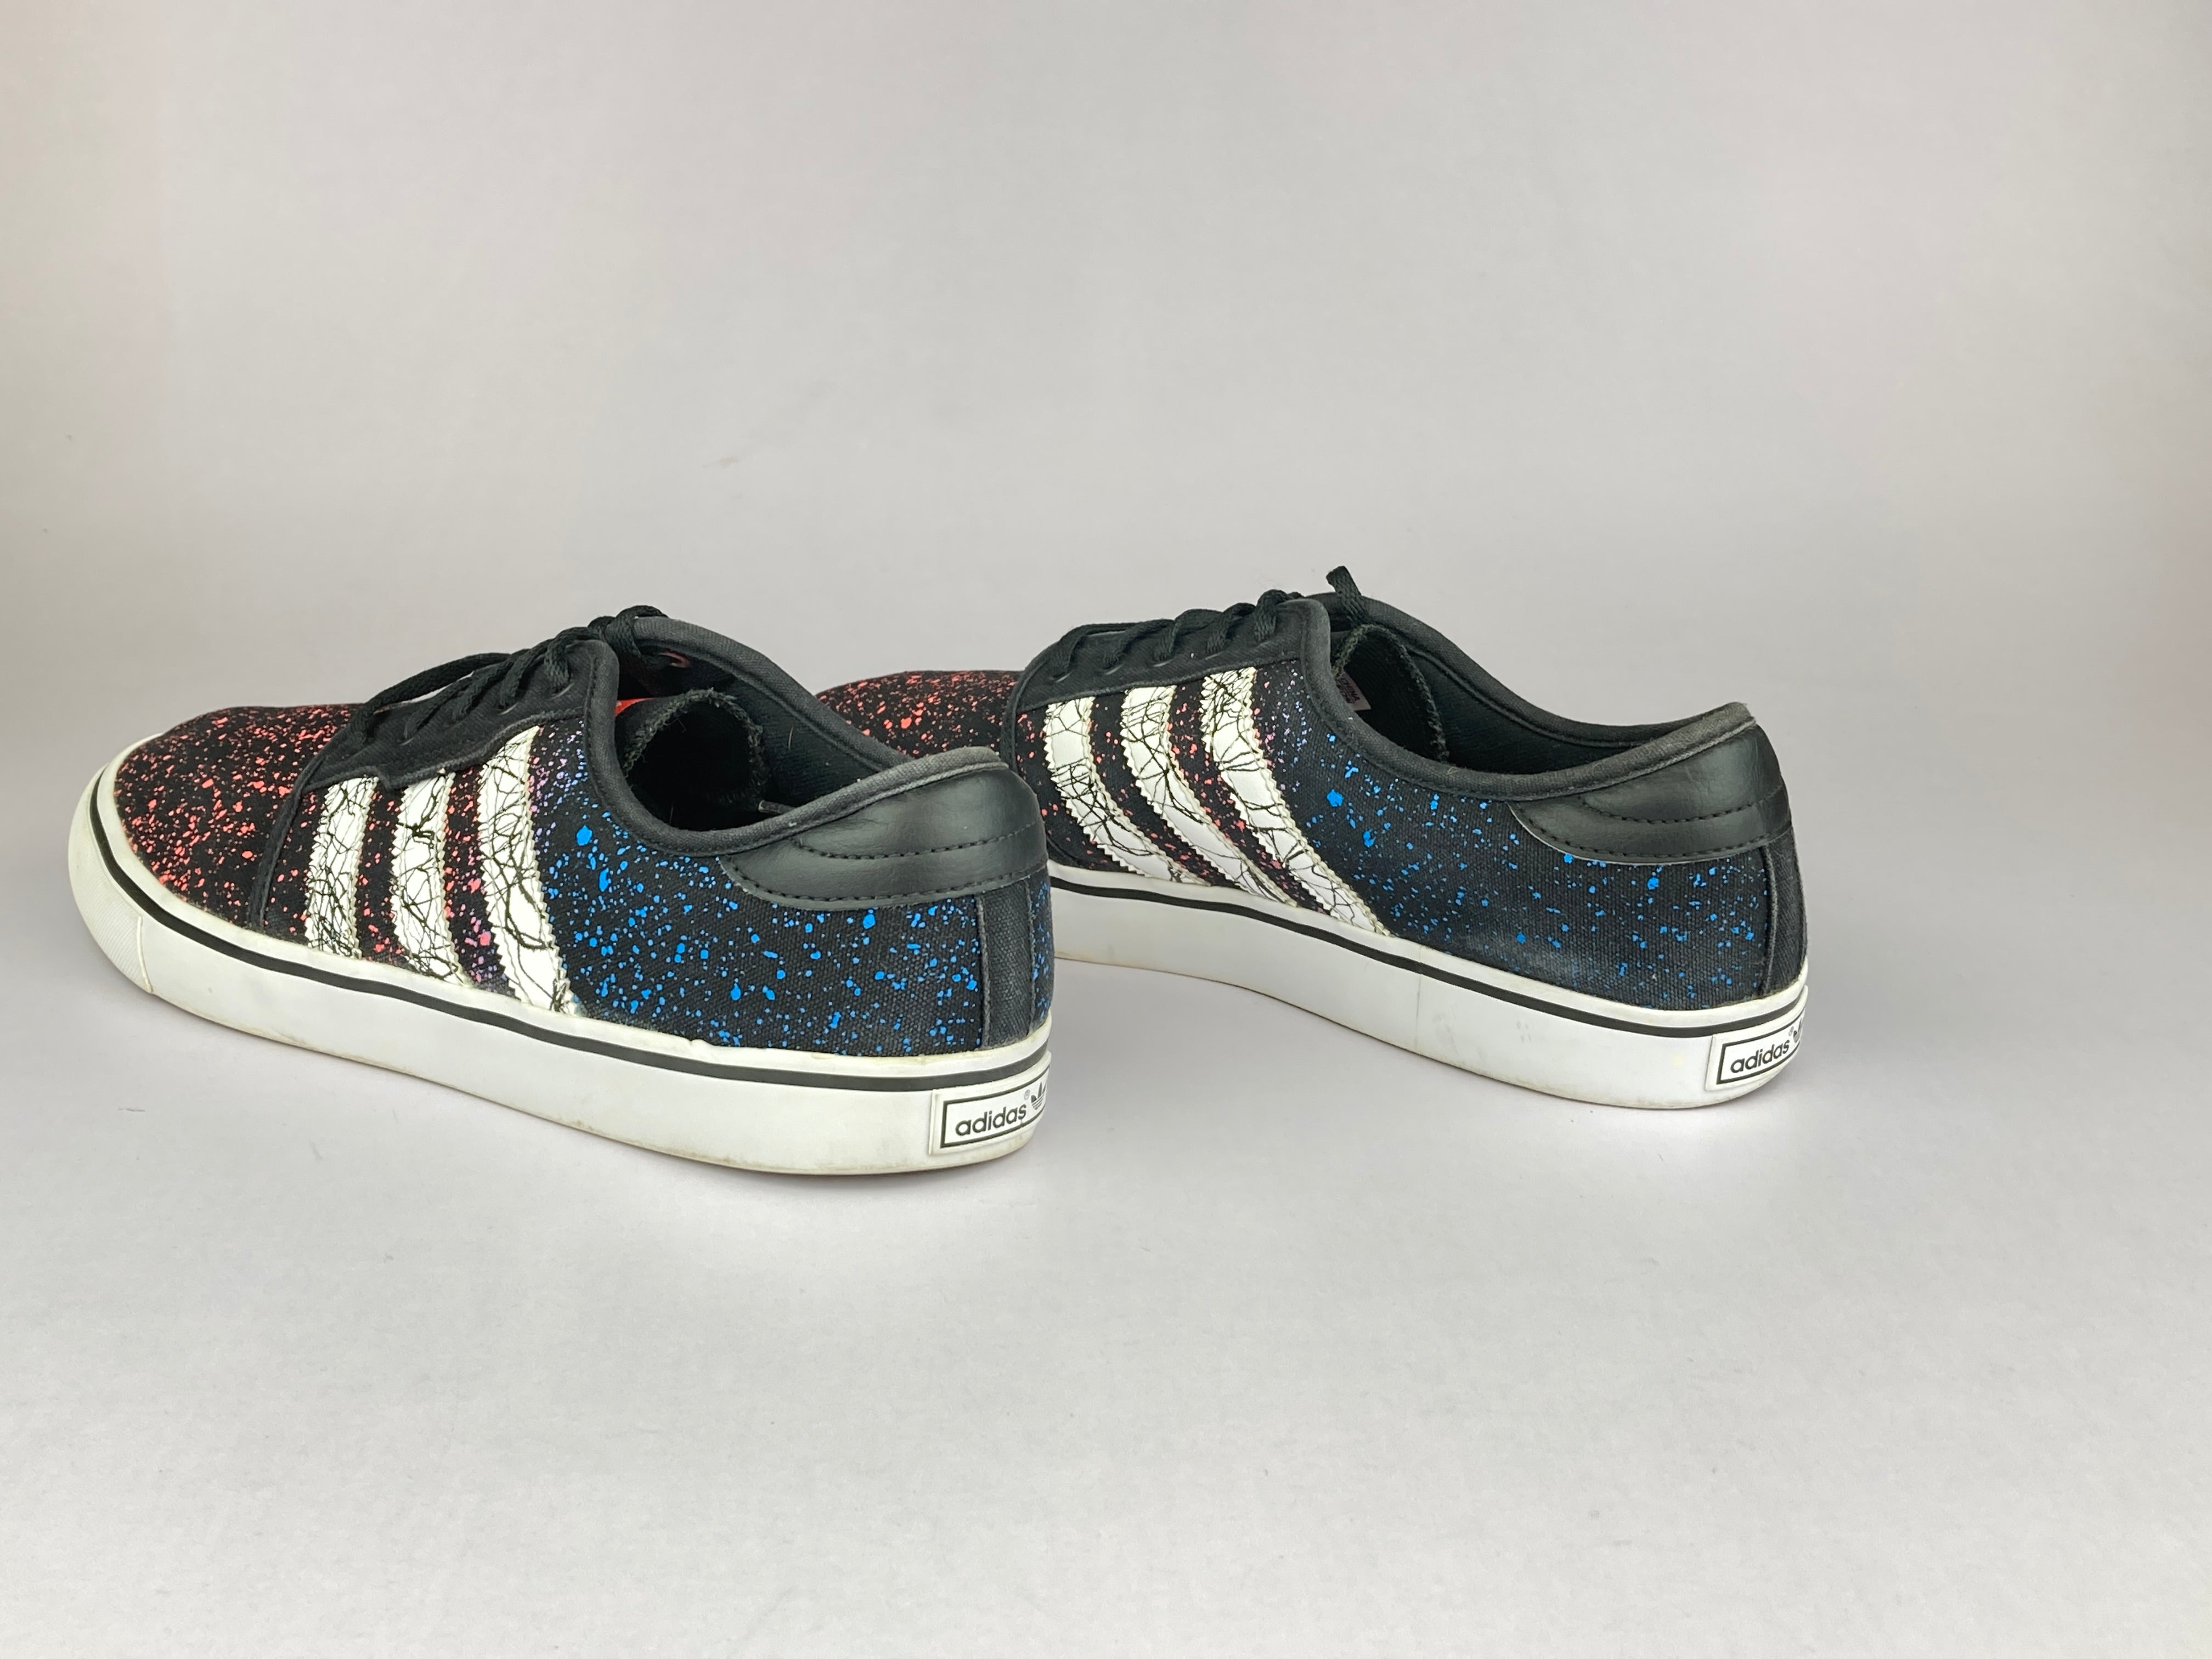 Adidas Originals Homme Seeley Bateau Skateboard Chaussures en Rouge | eBay